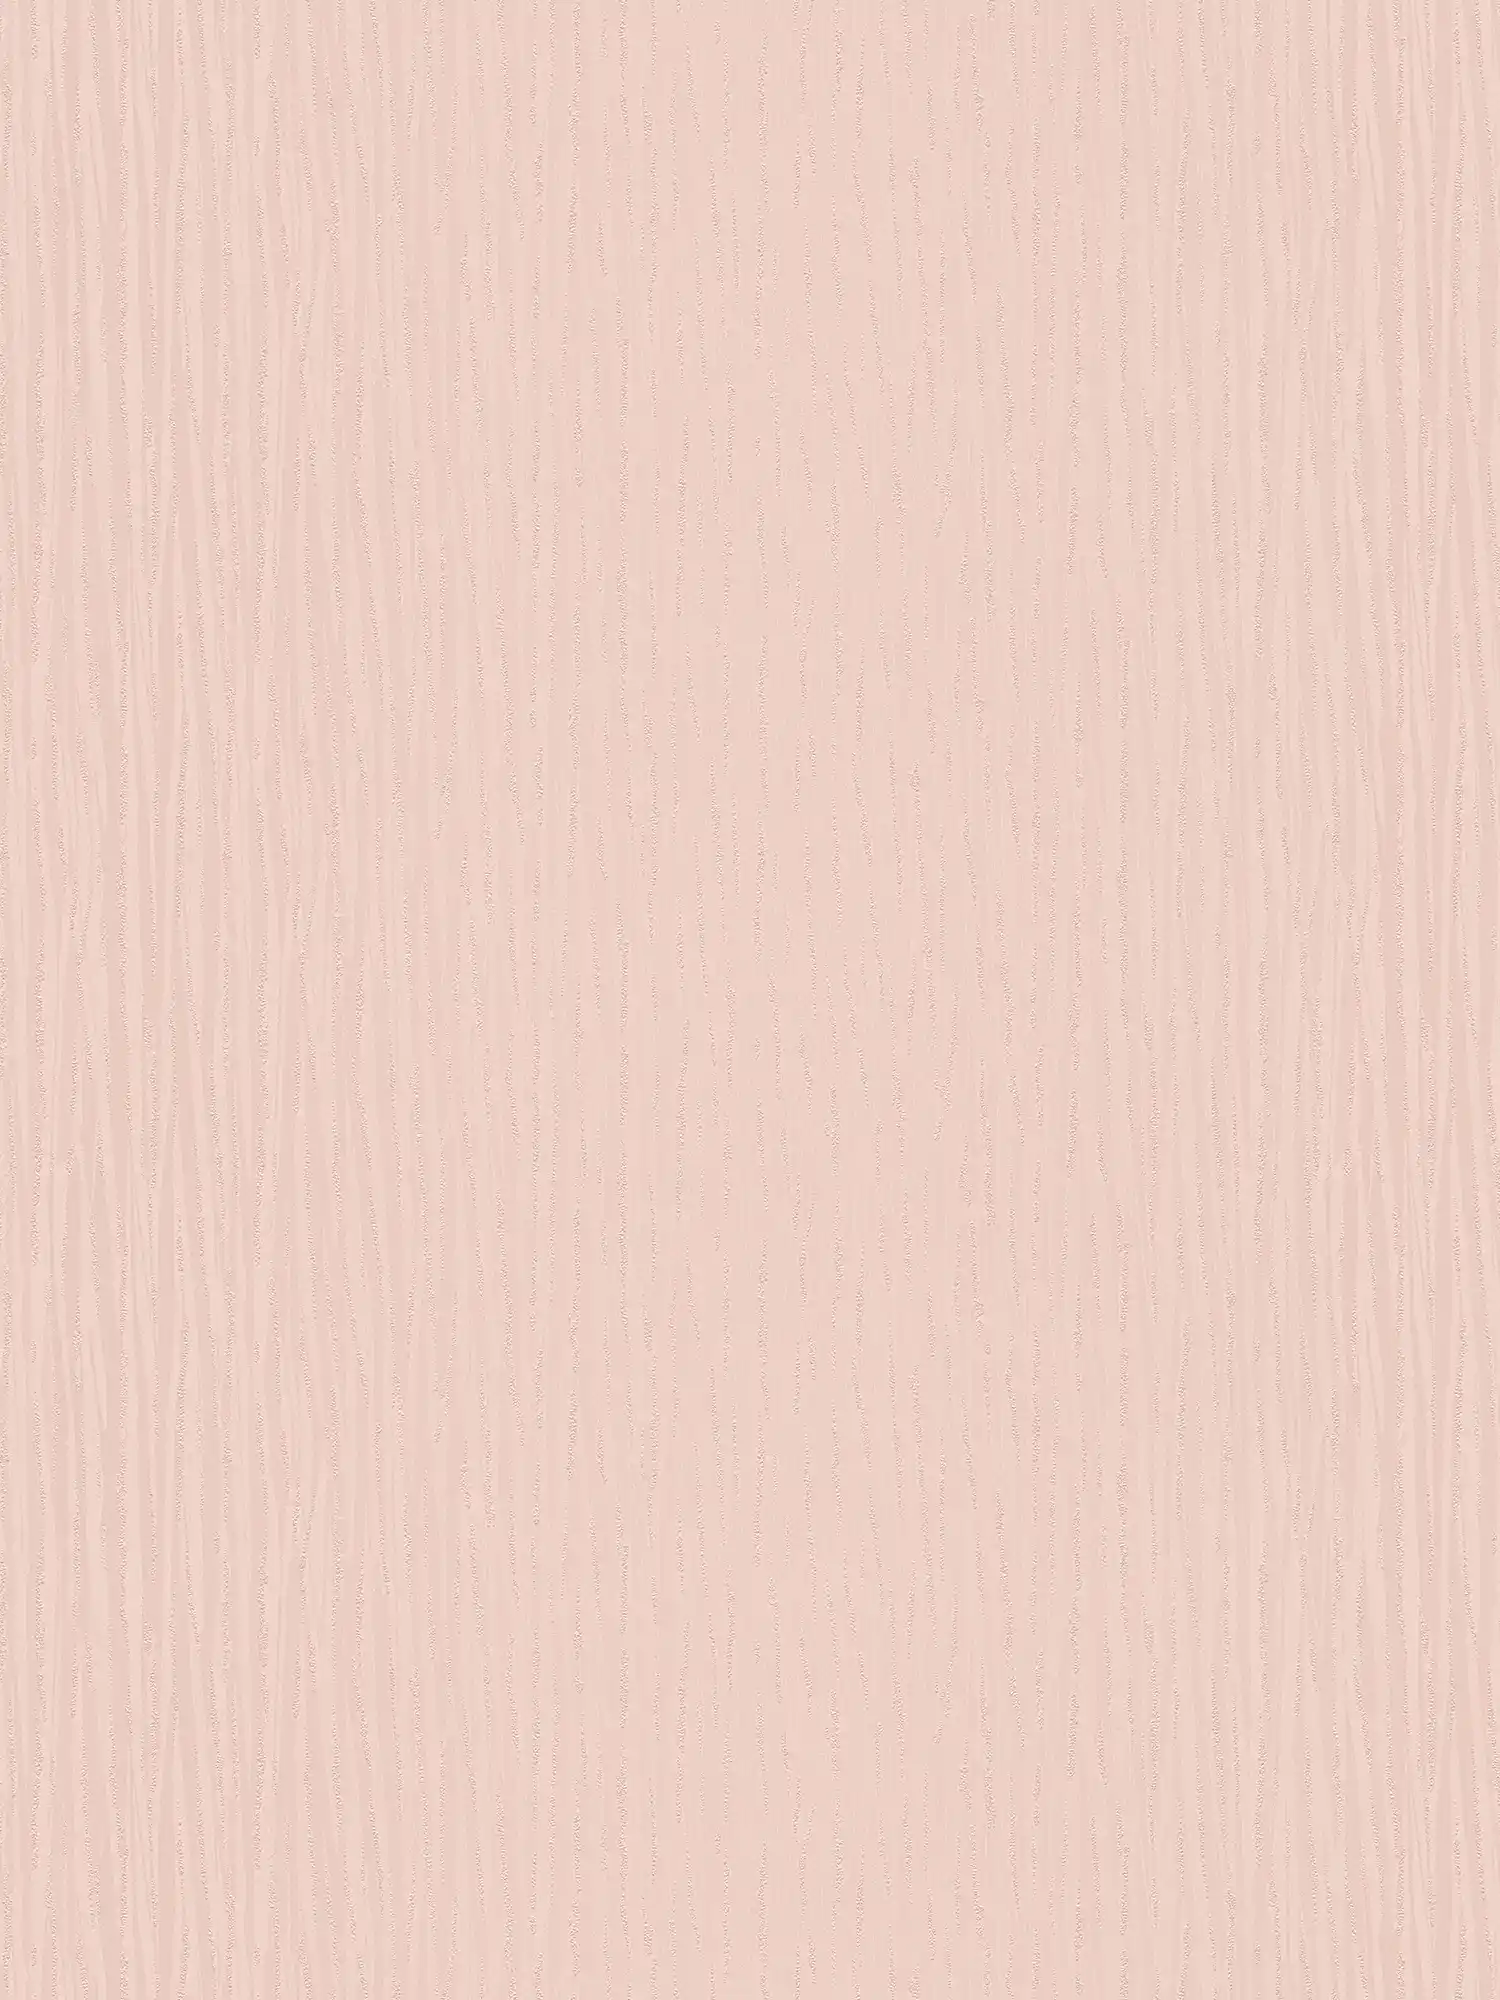 Vliesbehang roze pastel met metallic glans & kleurpatroon
